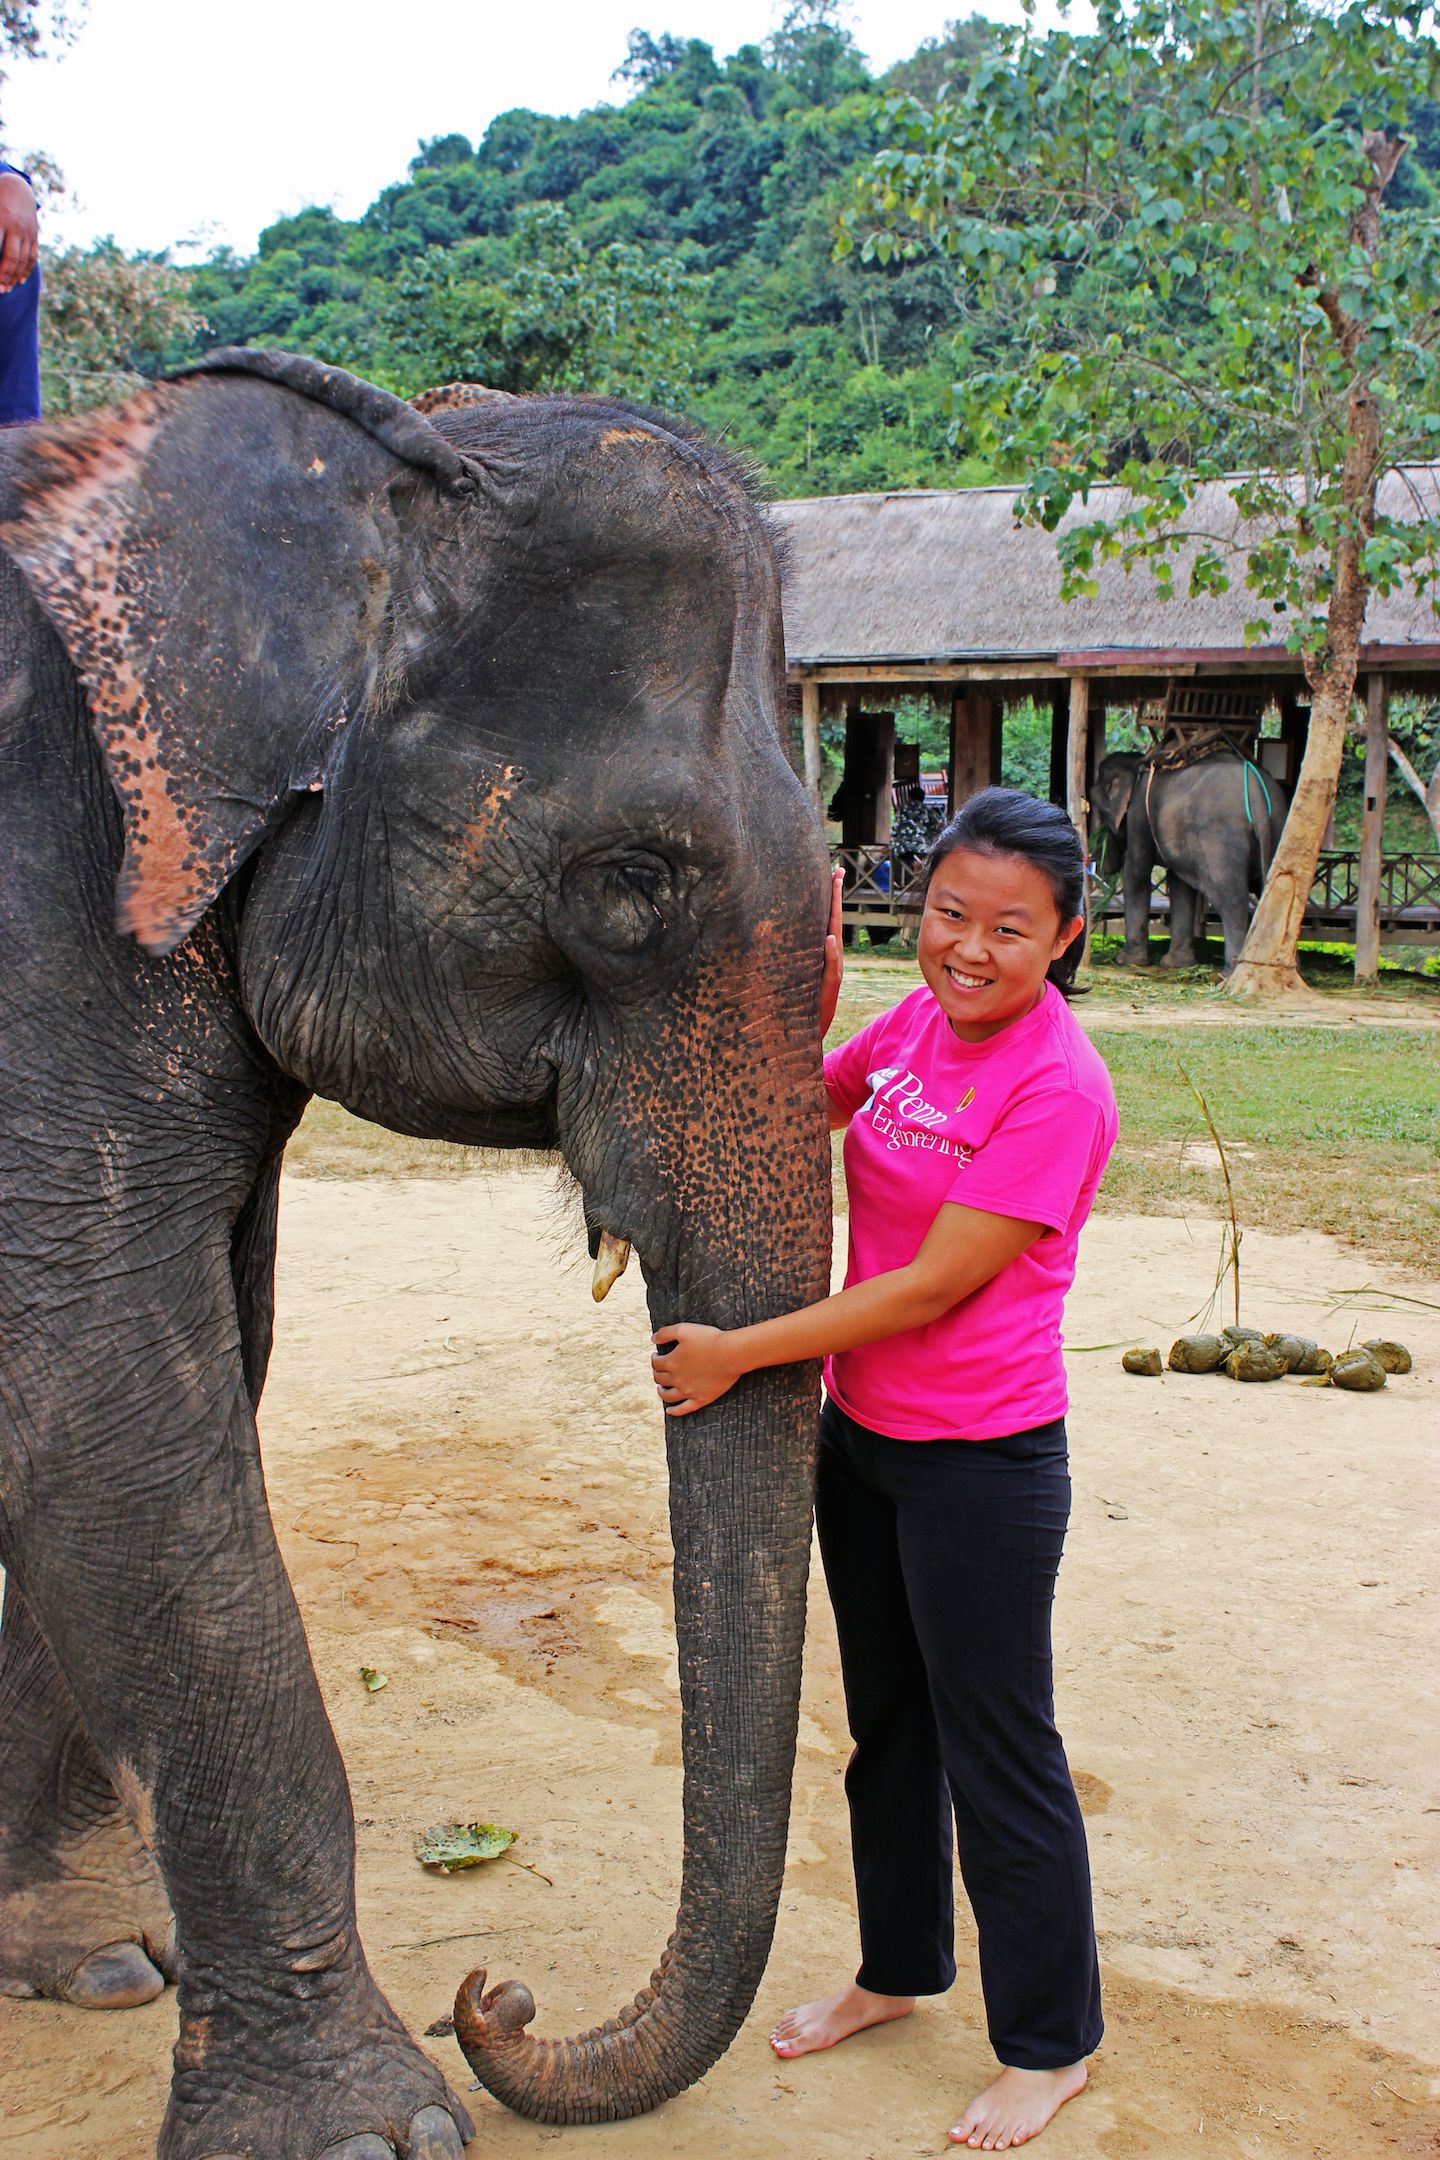 Julie hugging the elephant at the Elephant Village, Luang Prabang, Laos